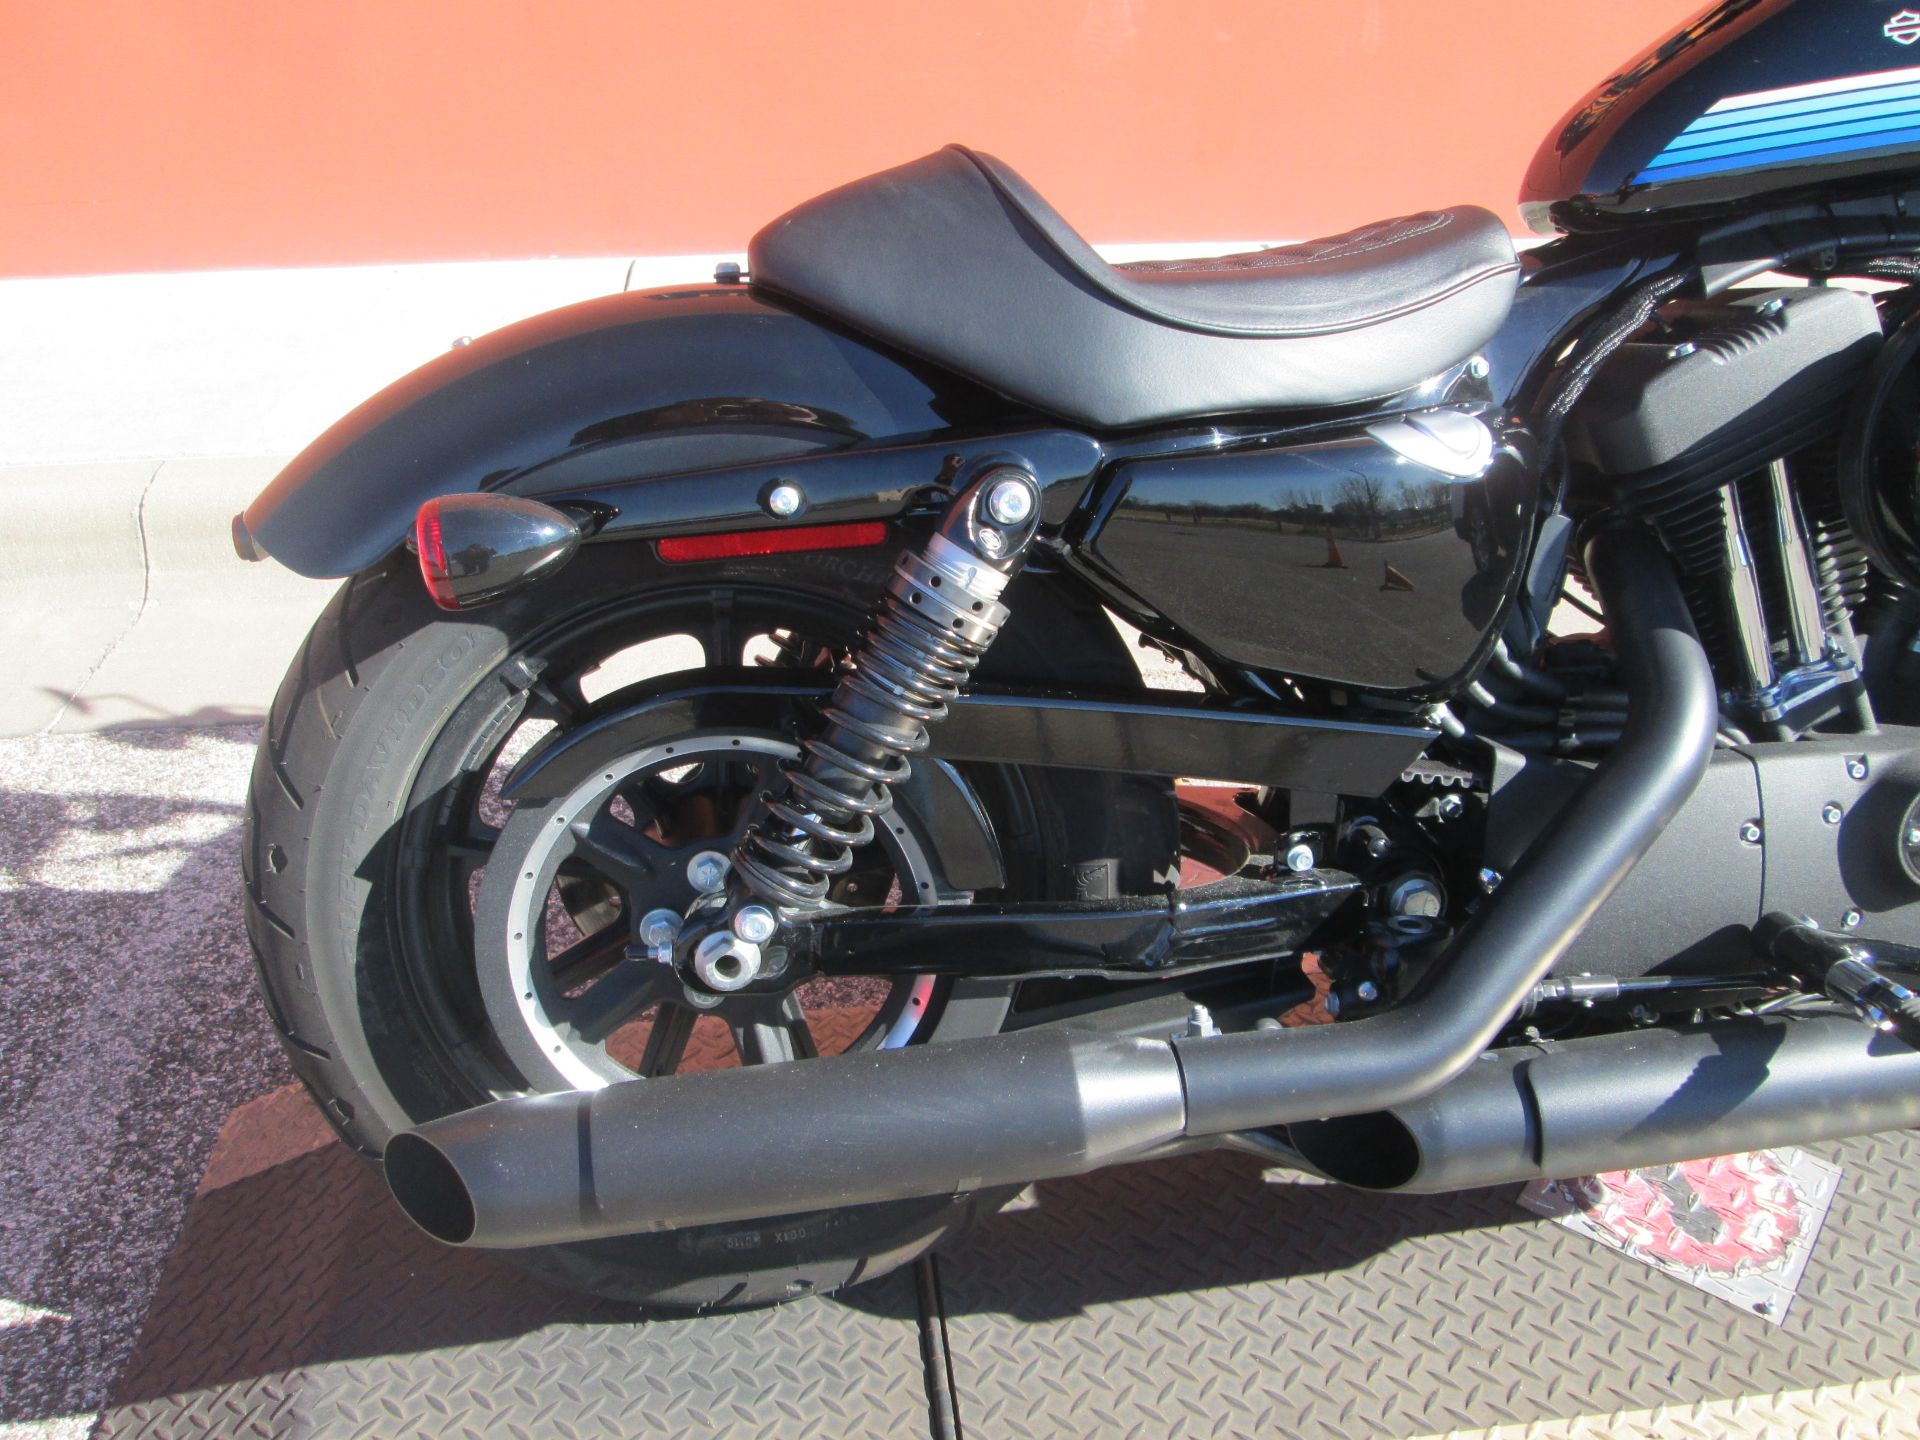 2019 Harley-Davidson Iron 1200™ in Temple, Texas - Photo 7